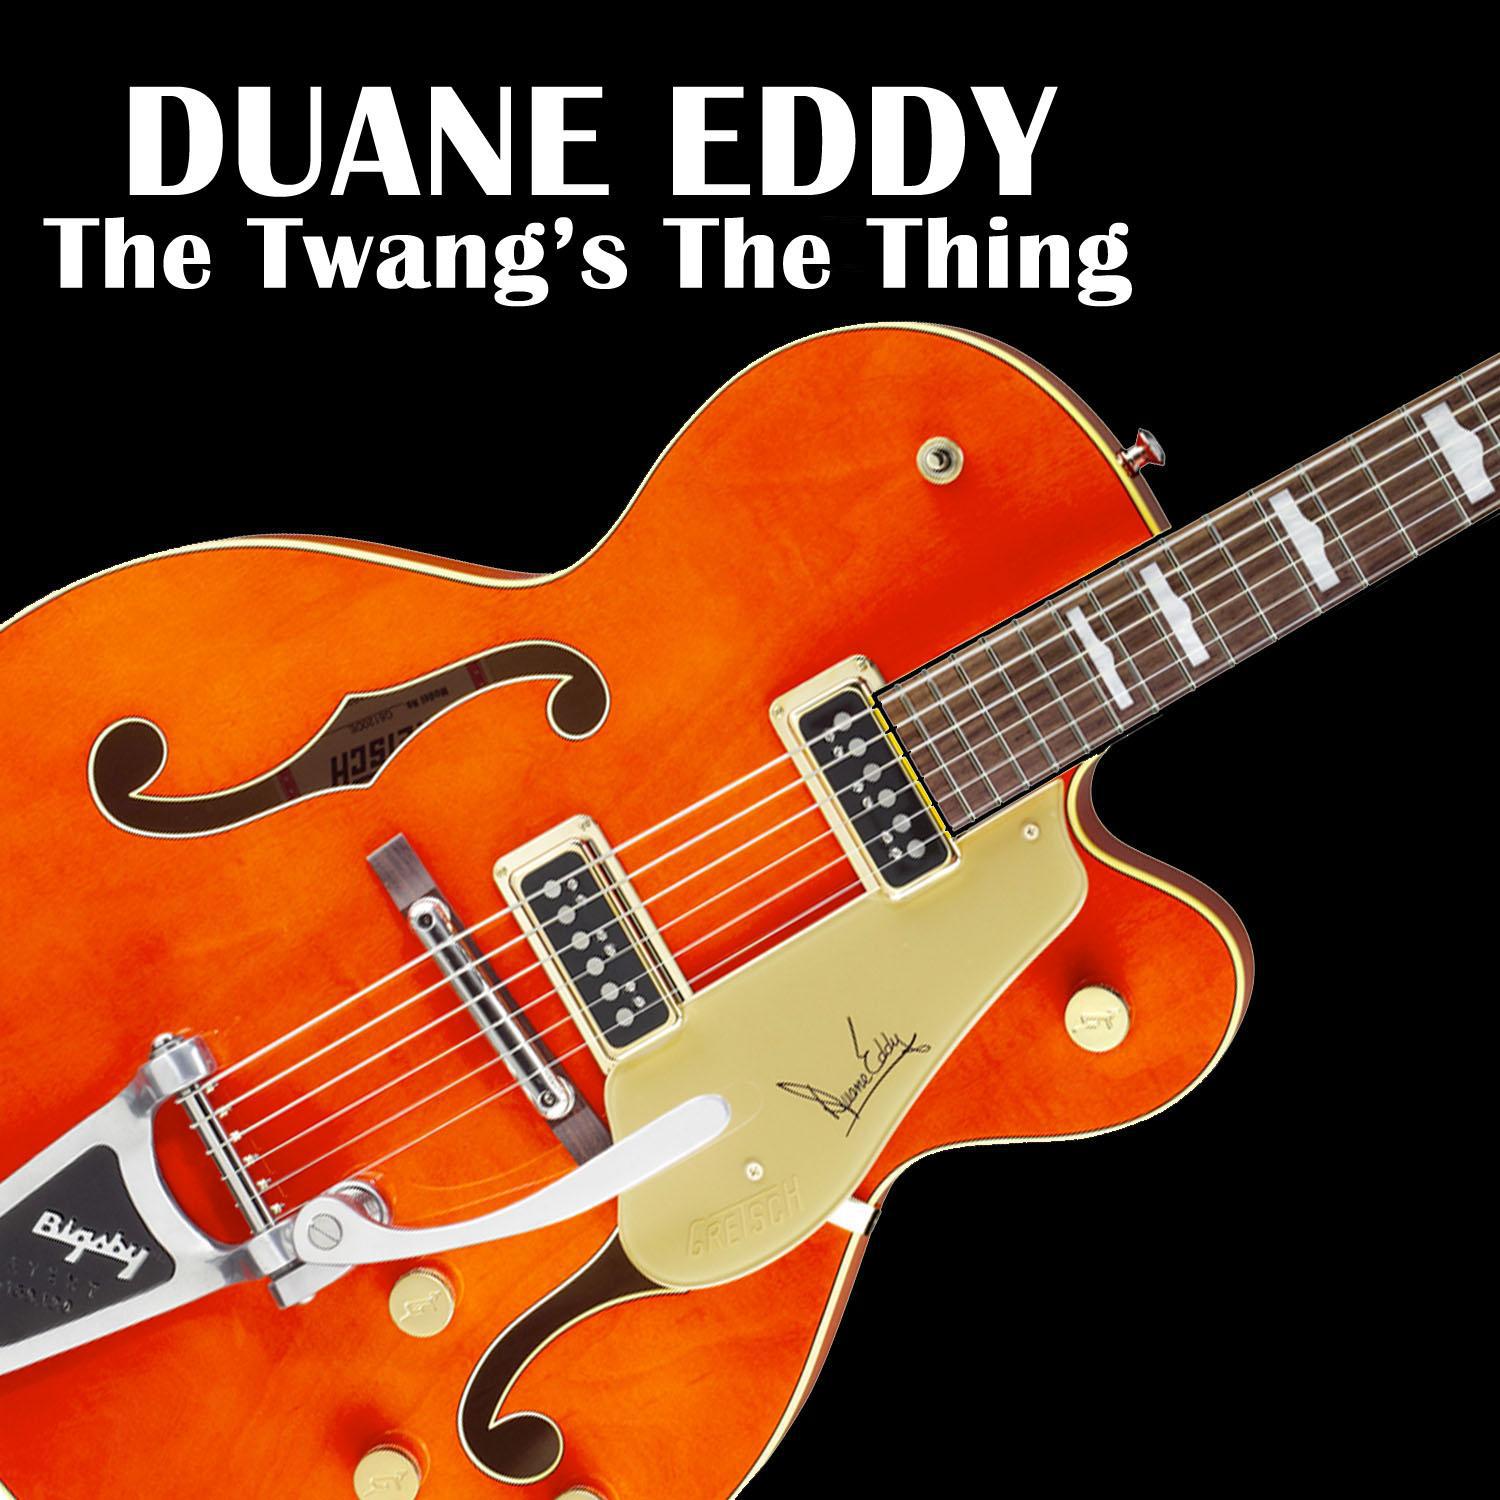 The Twang's the Thing